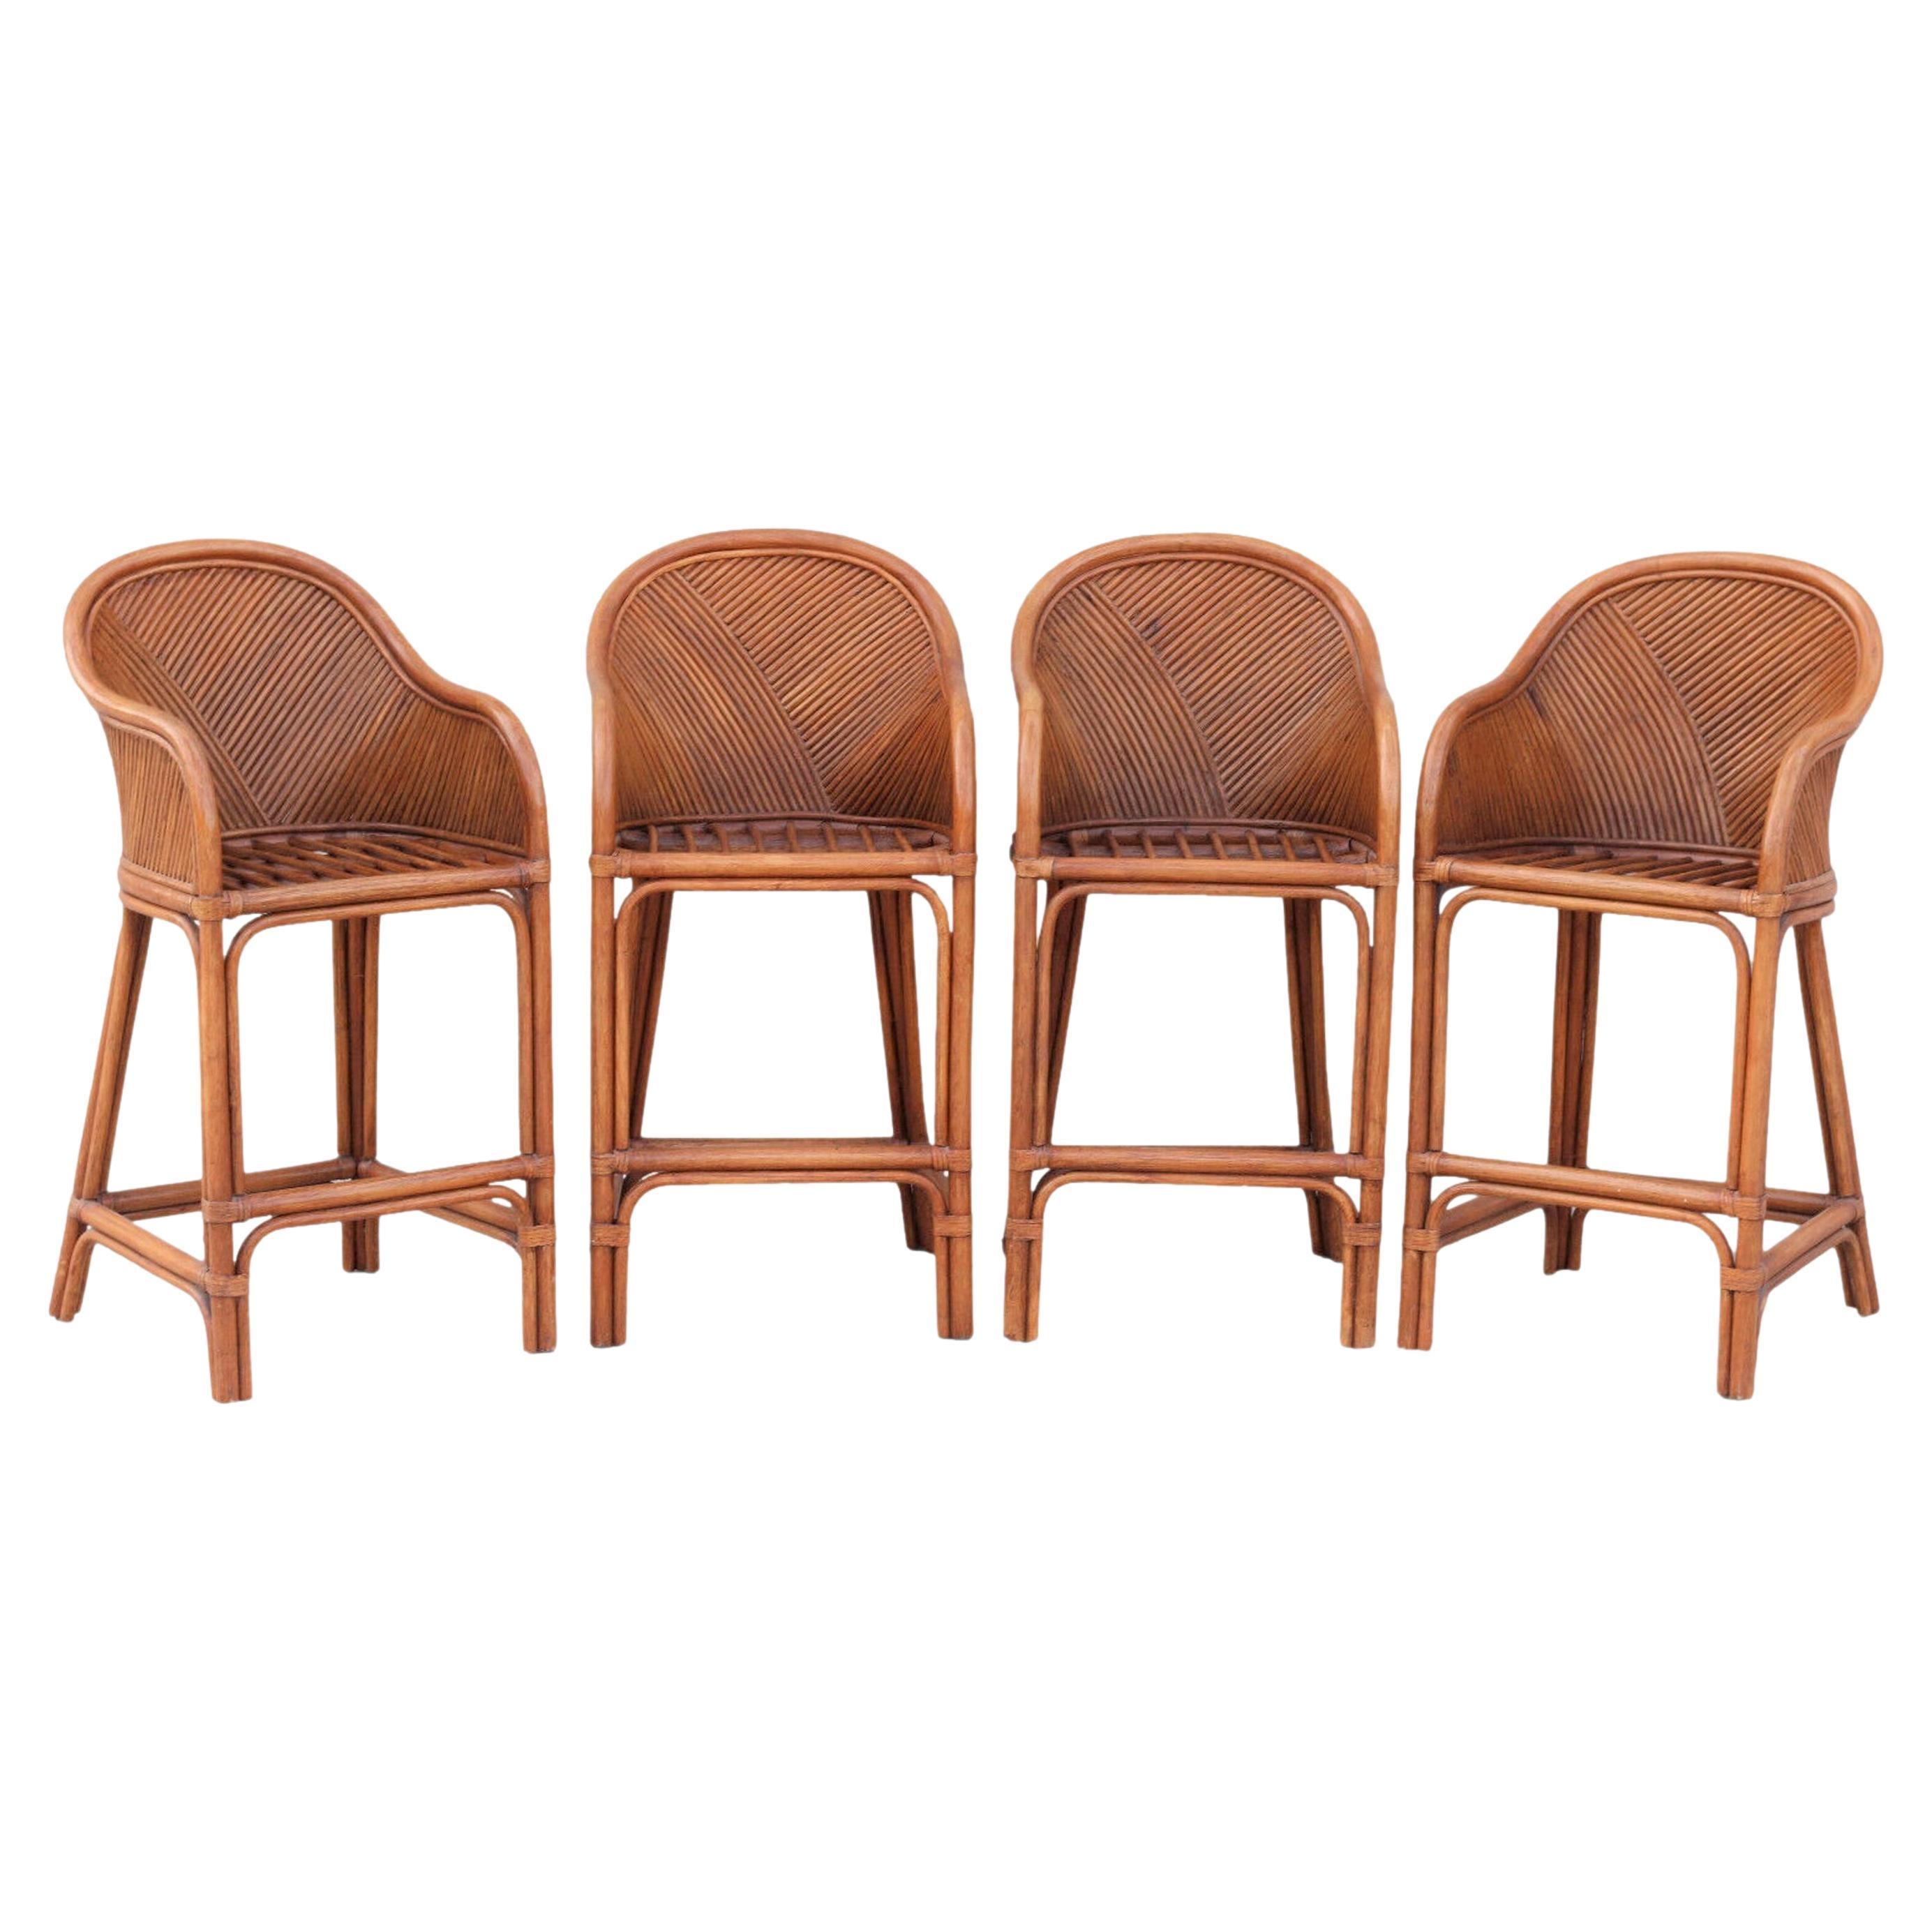 Are rattan bar stools comfortable?